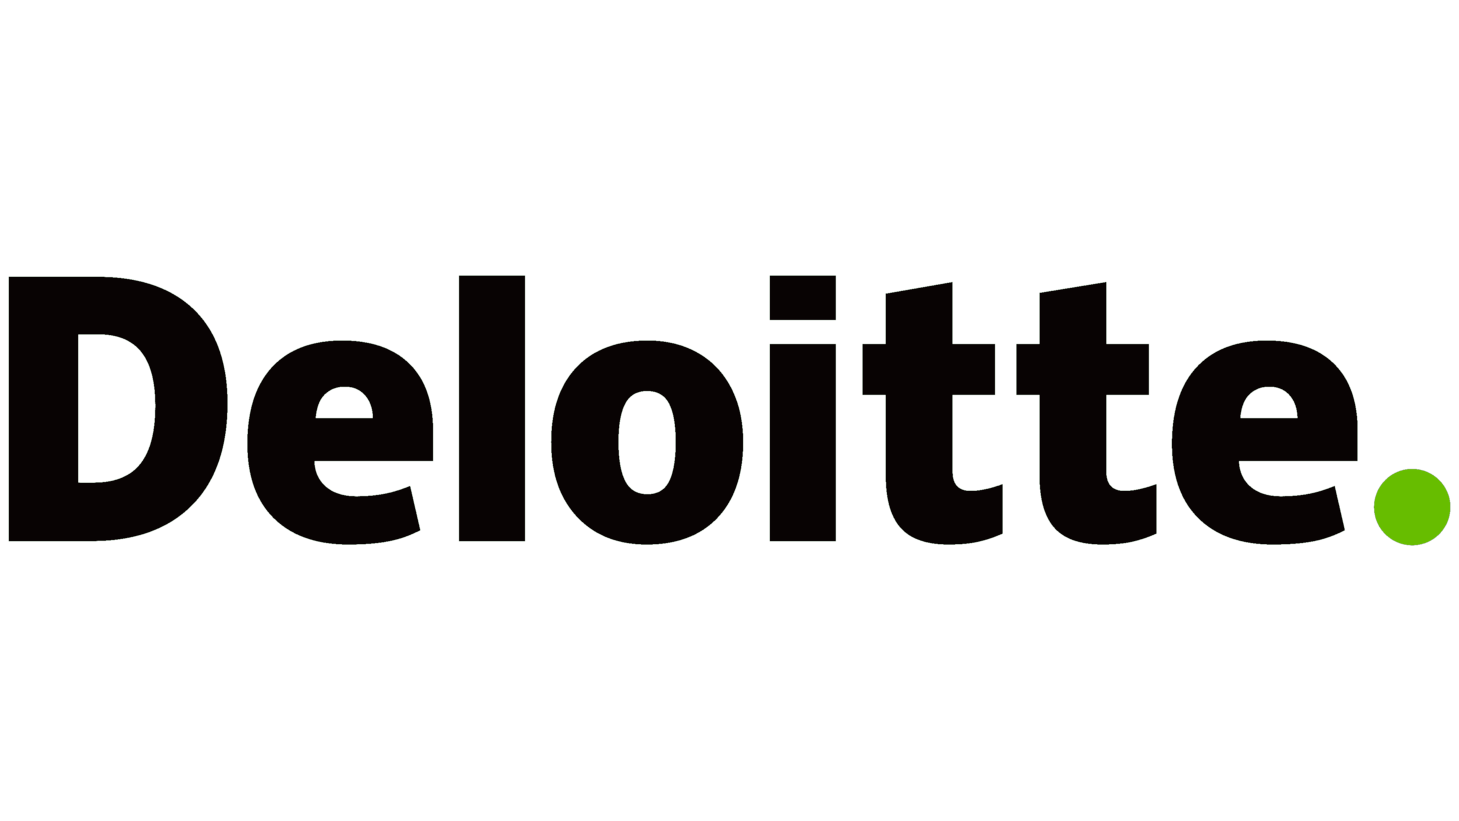 Deloitte sign 1993 present